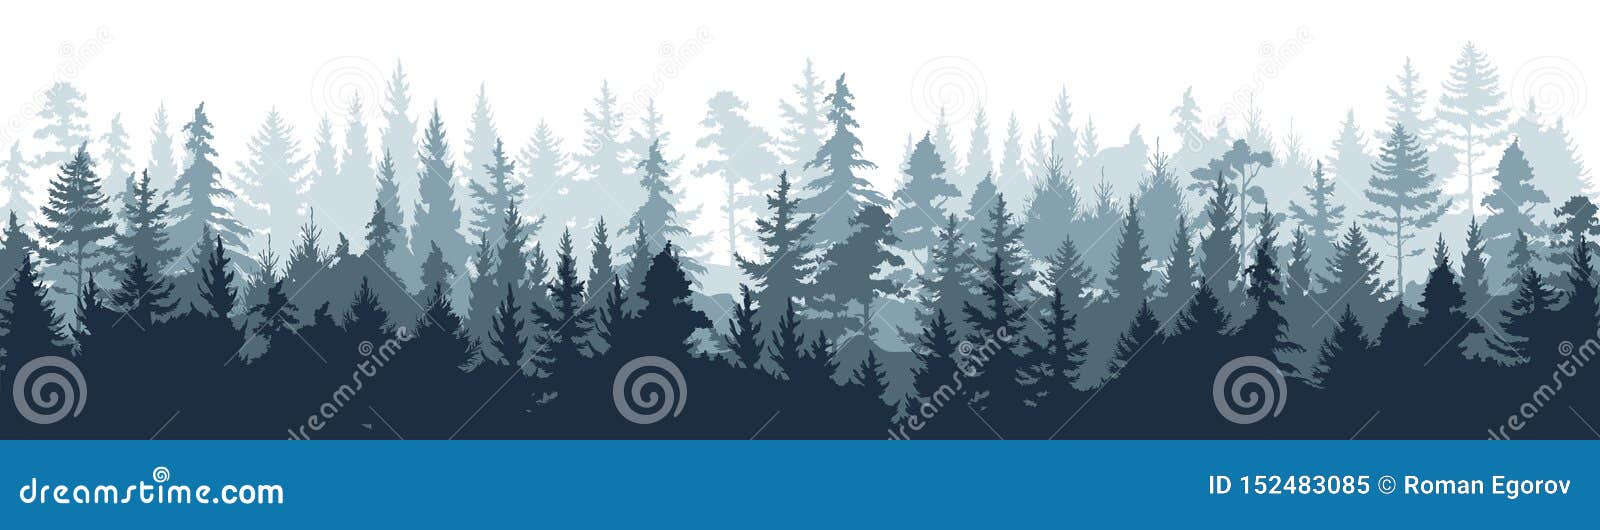 pine forest. silhouette wood tree background, wild nature woodland landscape.  foggy misty scene